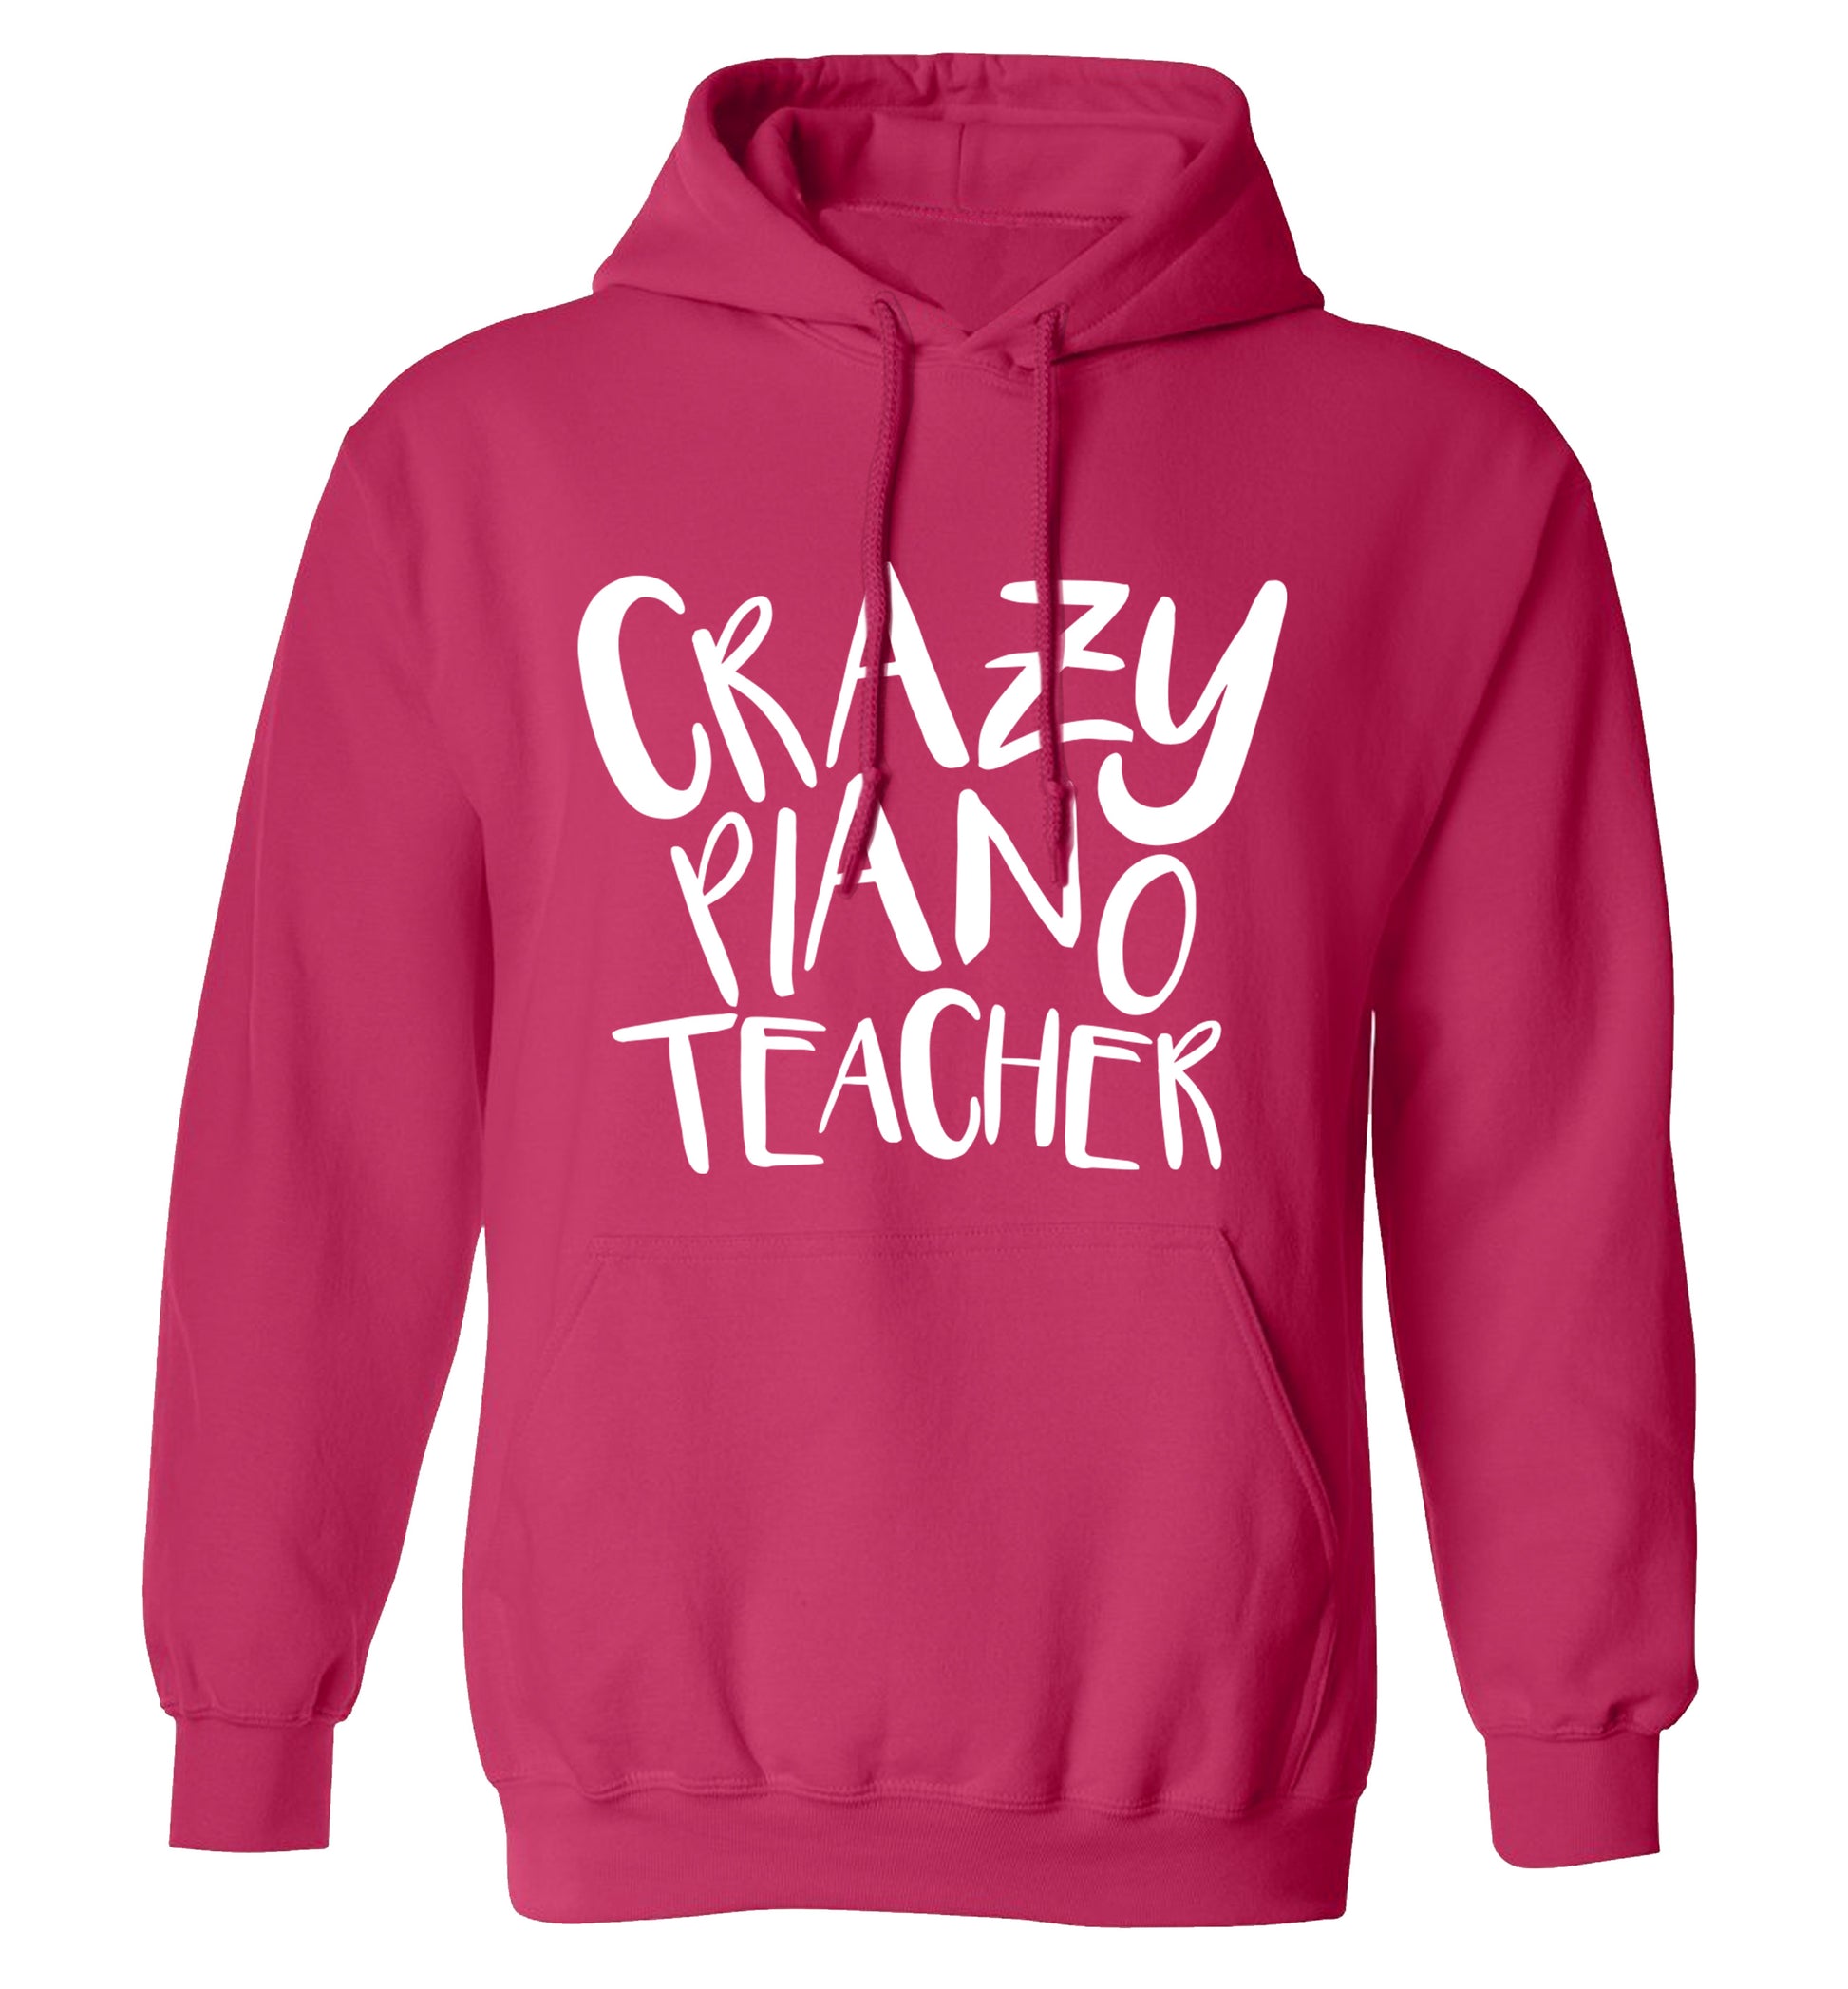 Crazy piano teacher adults unisex pink hoodie 2XL